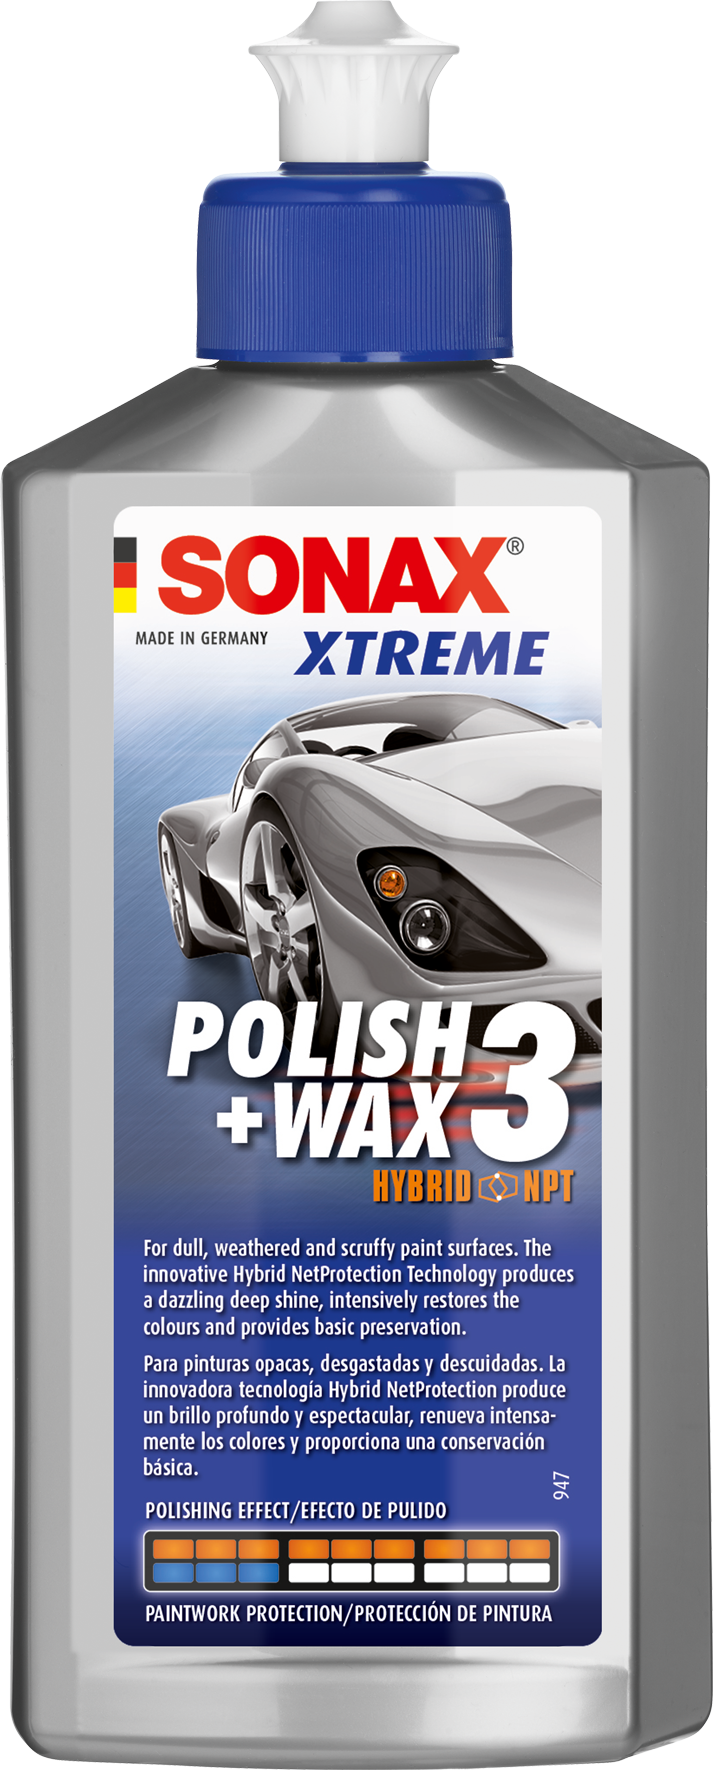 SONAX XTREME upholstery + Alcantara® cleaner propellant-free